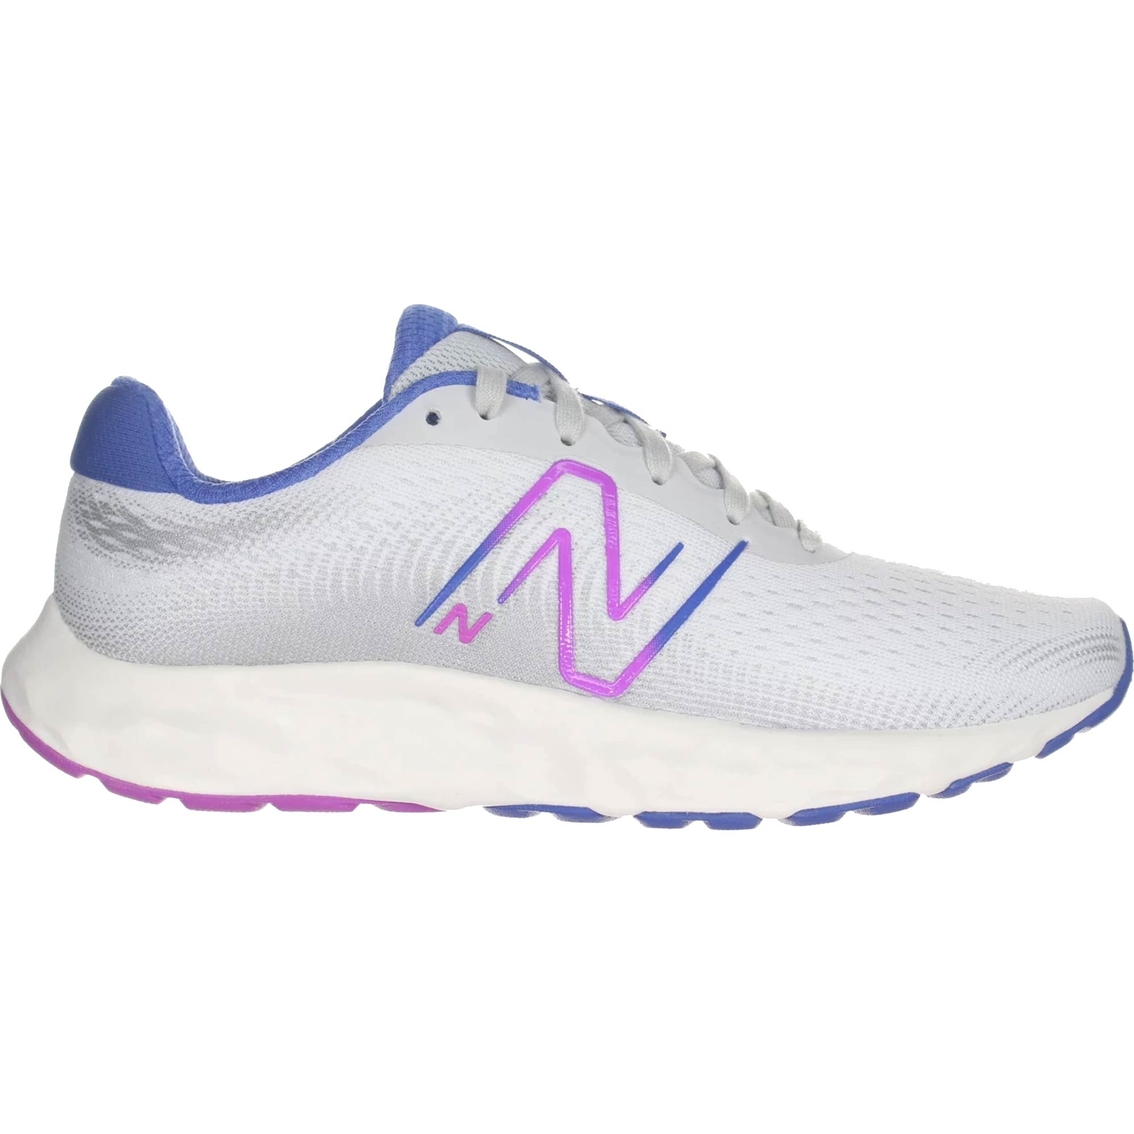 New Balance Women's 520v8 Running Shoes - Image 2 of 4